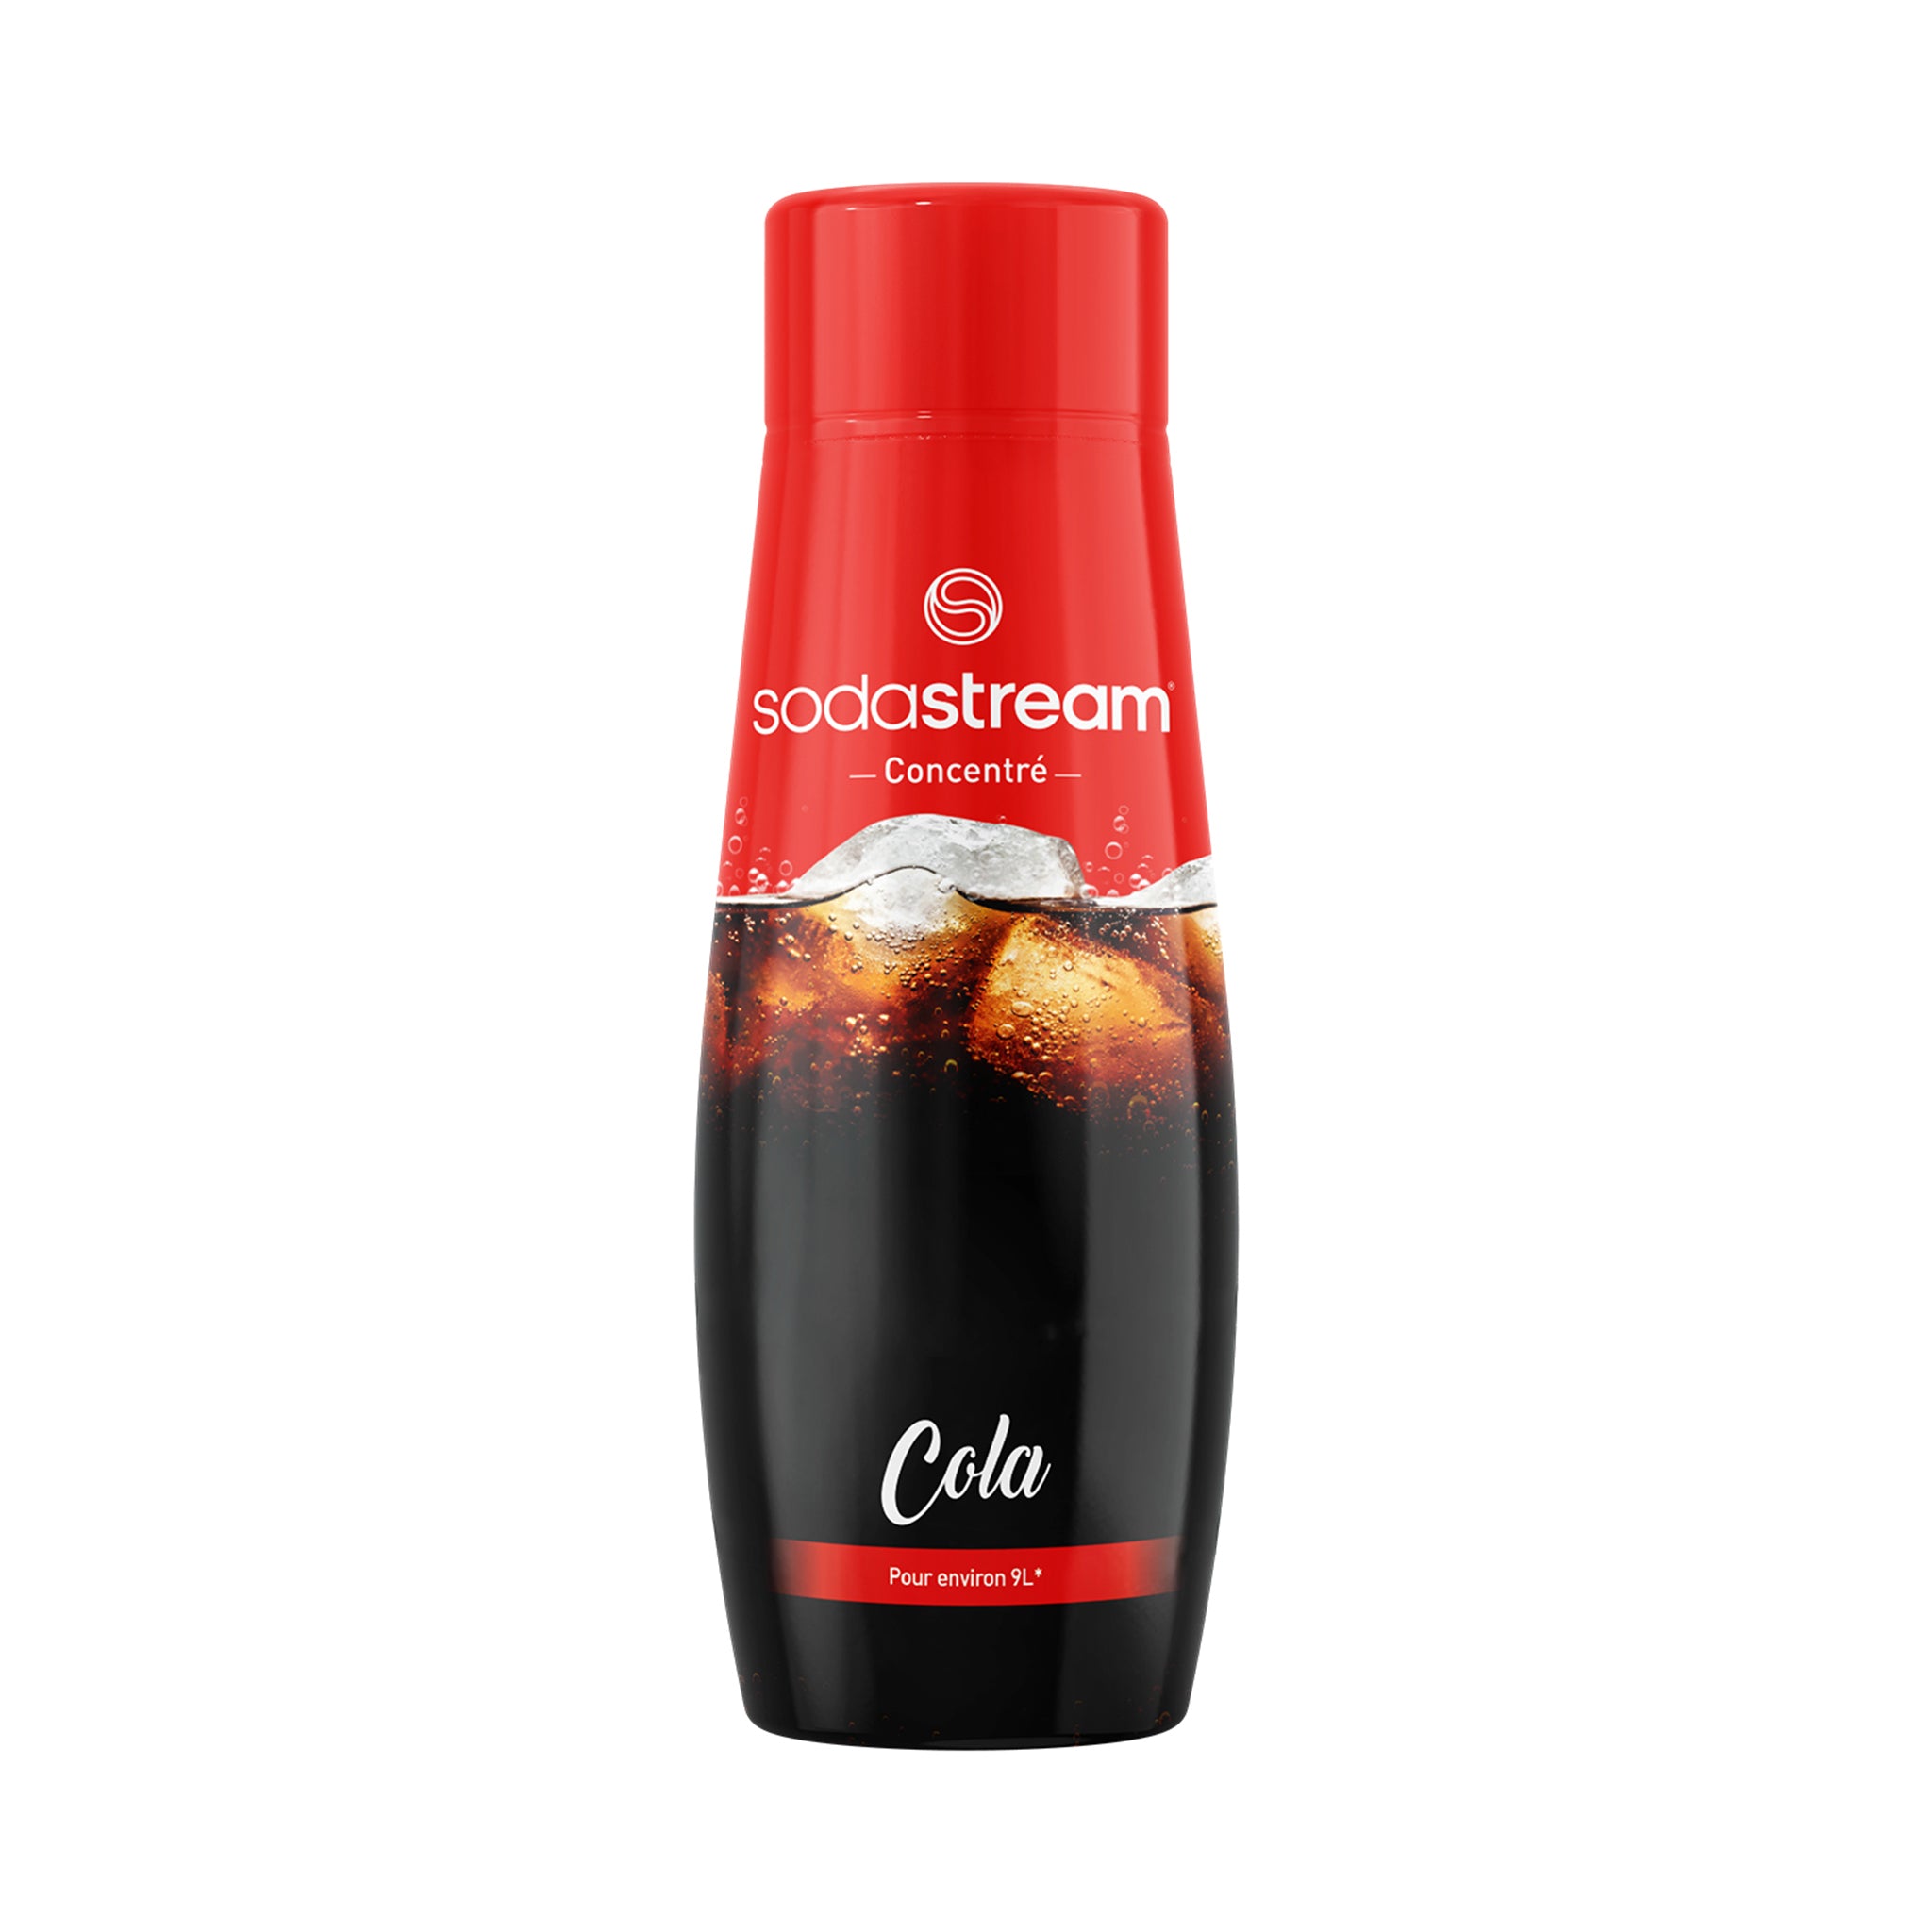 Cola 440ml sodastream